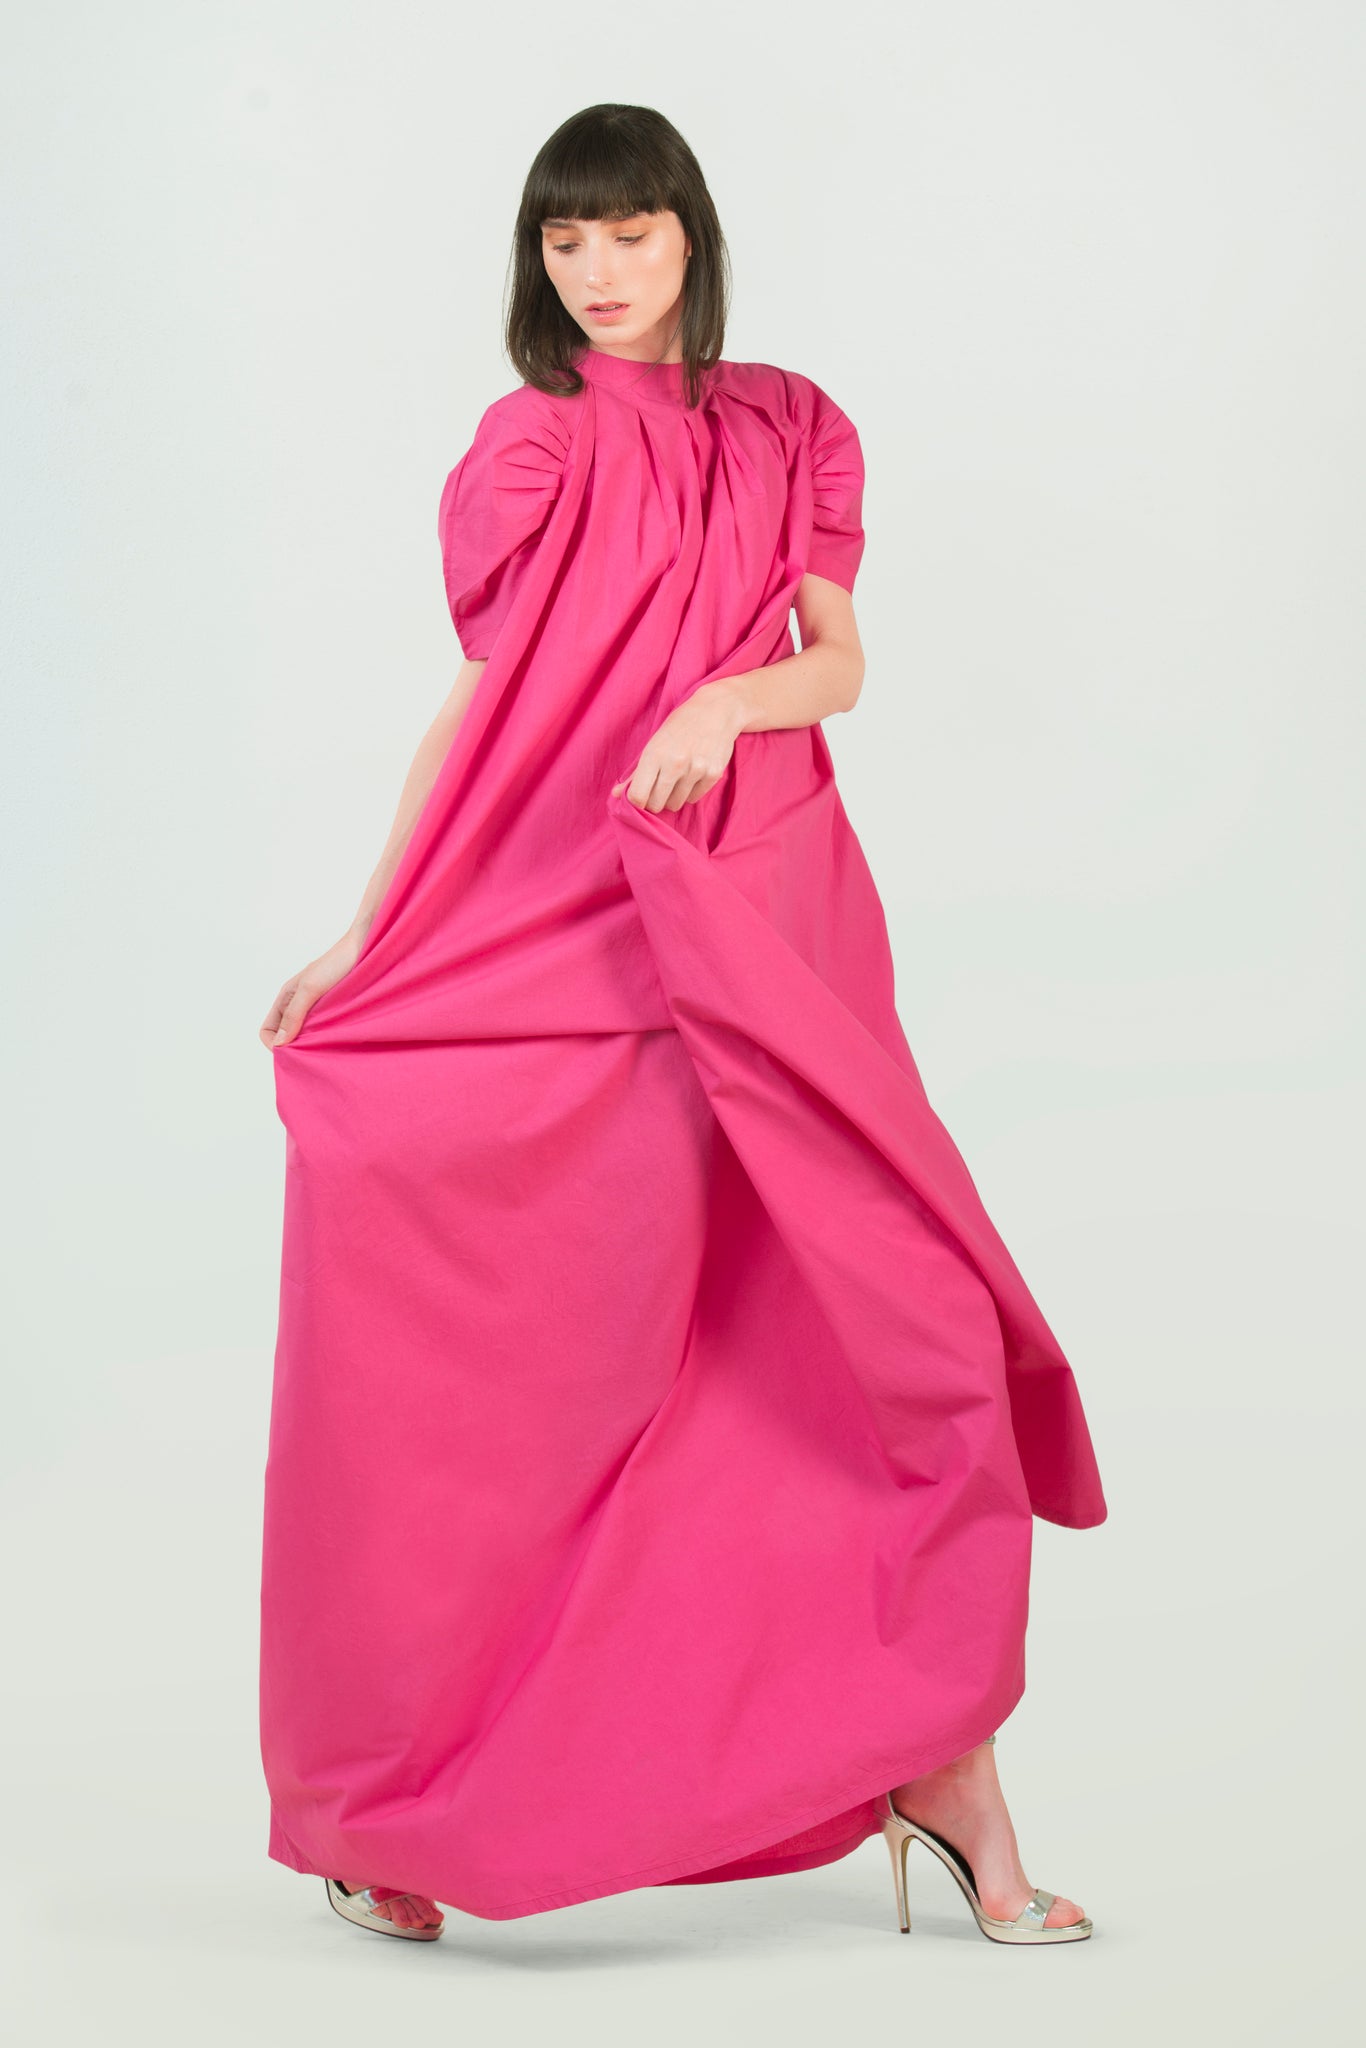 Pink Supima Cotton Long Dress - AGAATI